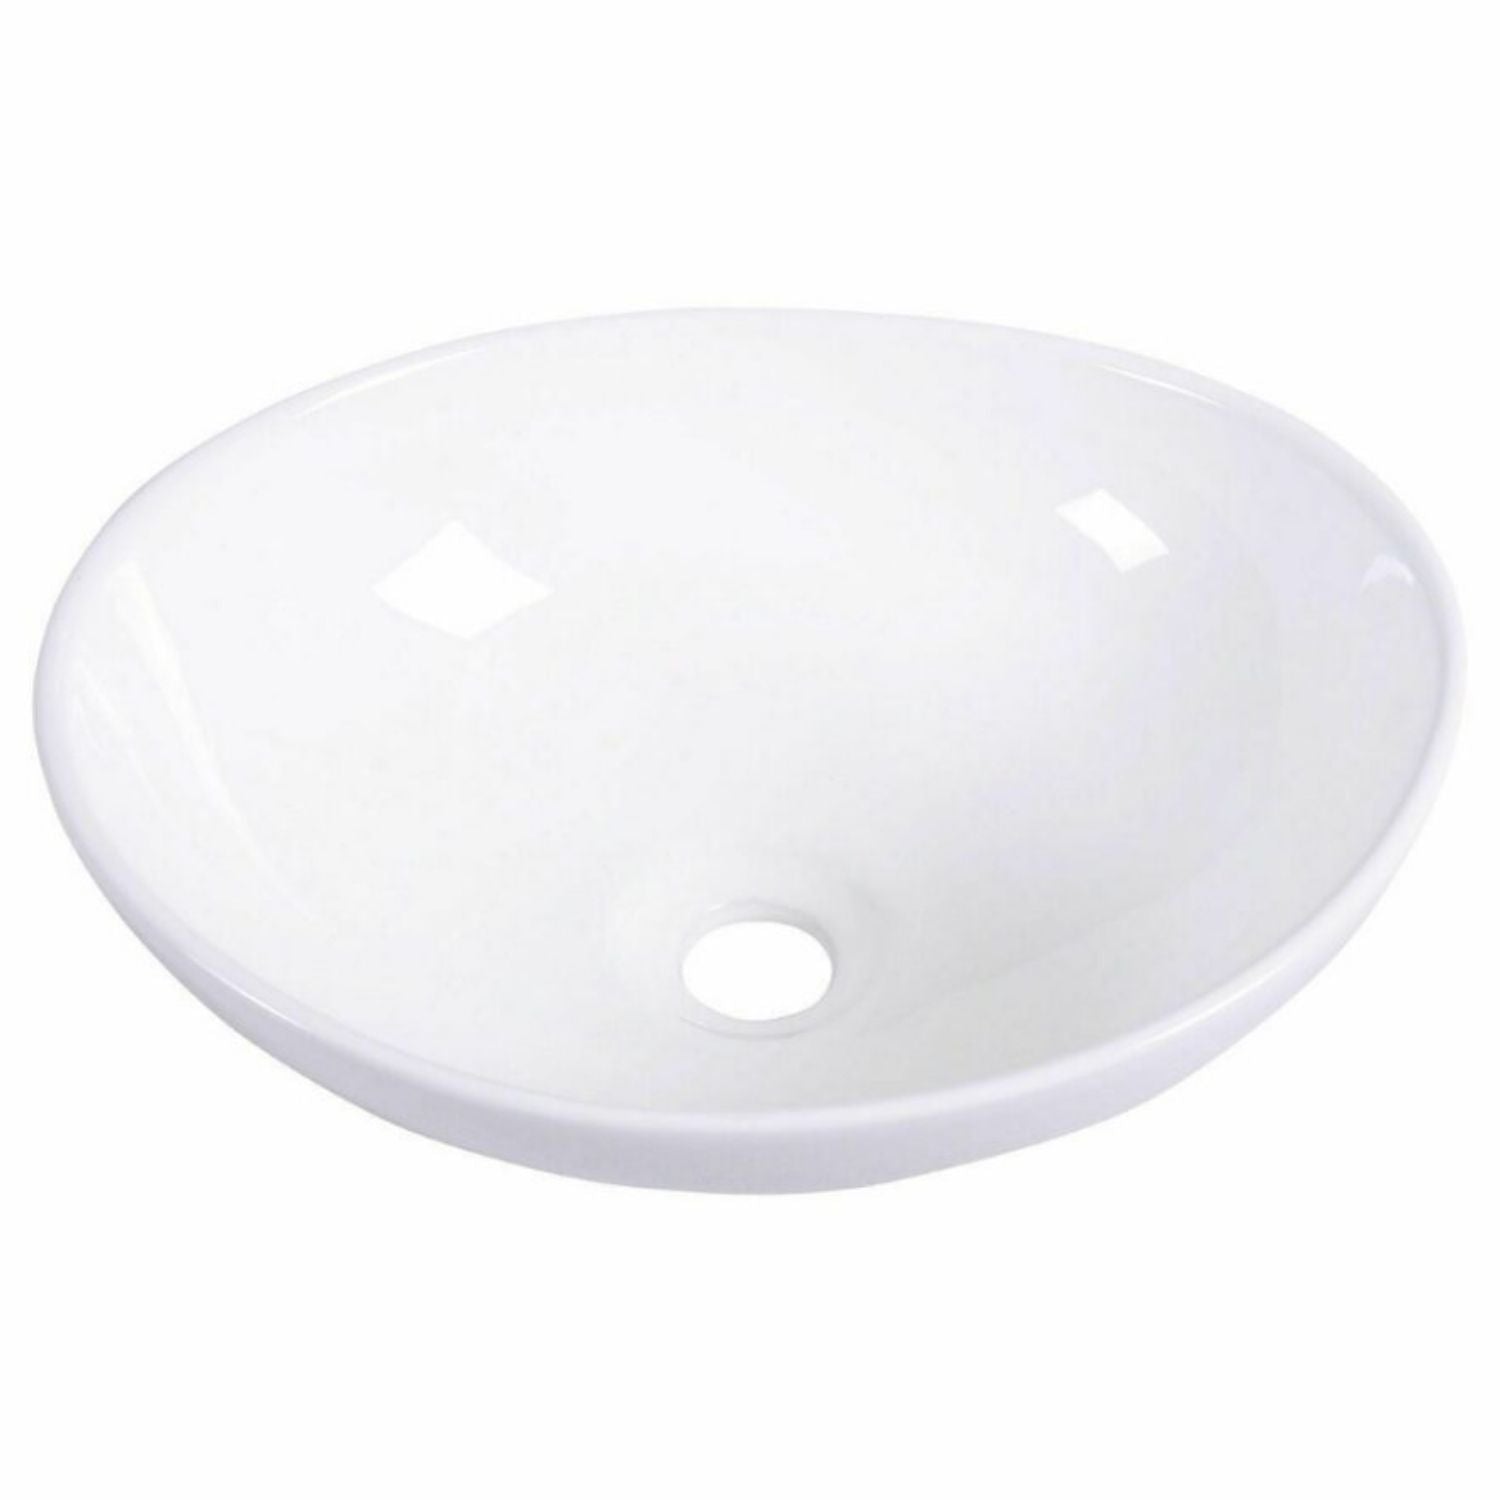 AMIRRA Ceramic Basin Oval Sink Bowl (White)